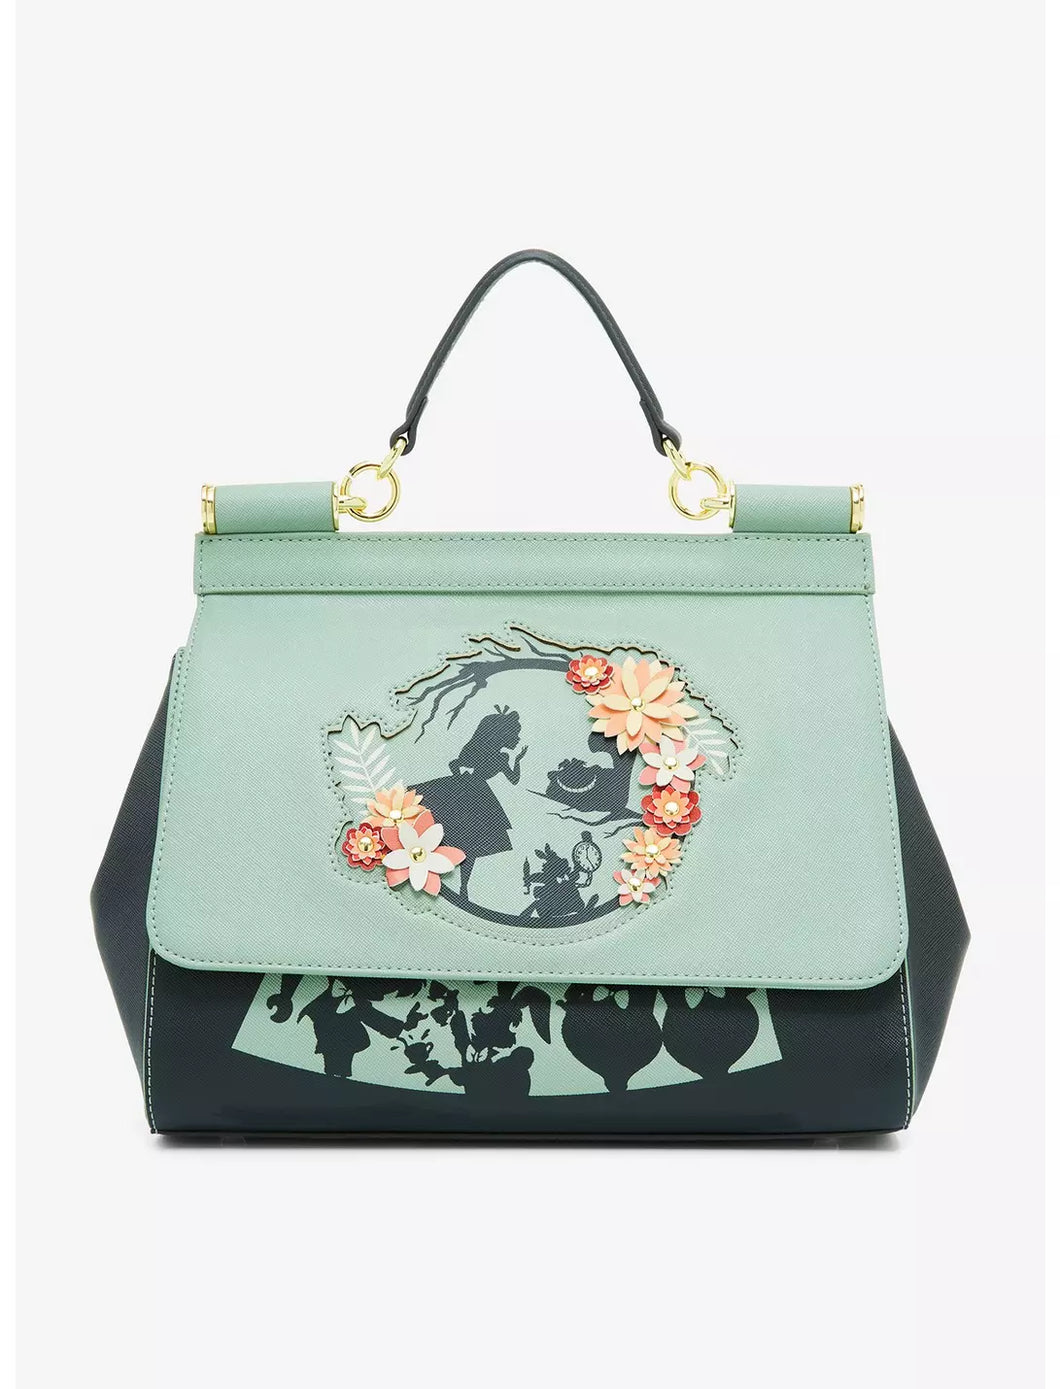 Disney Handbag Alice in Wonderland Floral Silhouette Loungefly